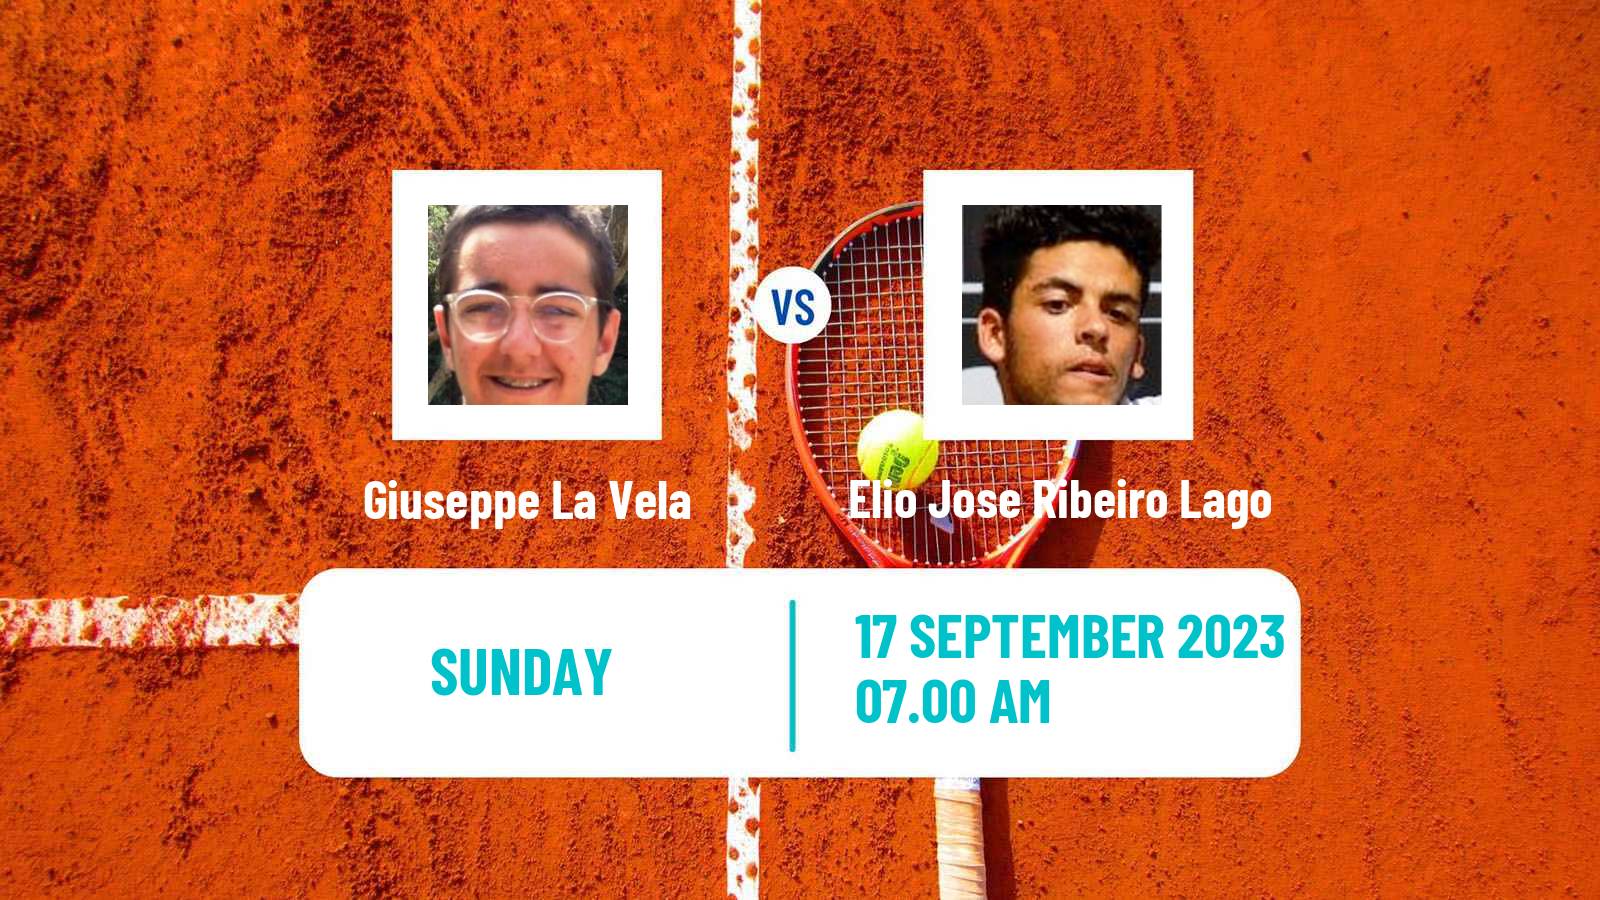 Tennis ITF M15 Satu Mare Men Giuseppe La Vela - Elio Jose Ribeiro Lago